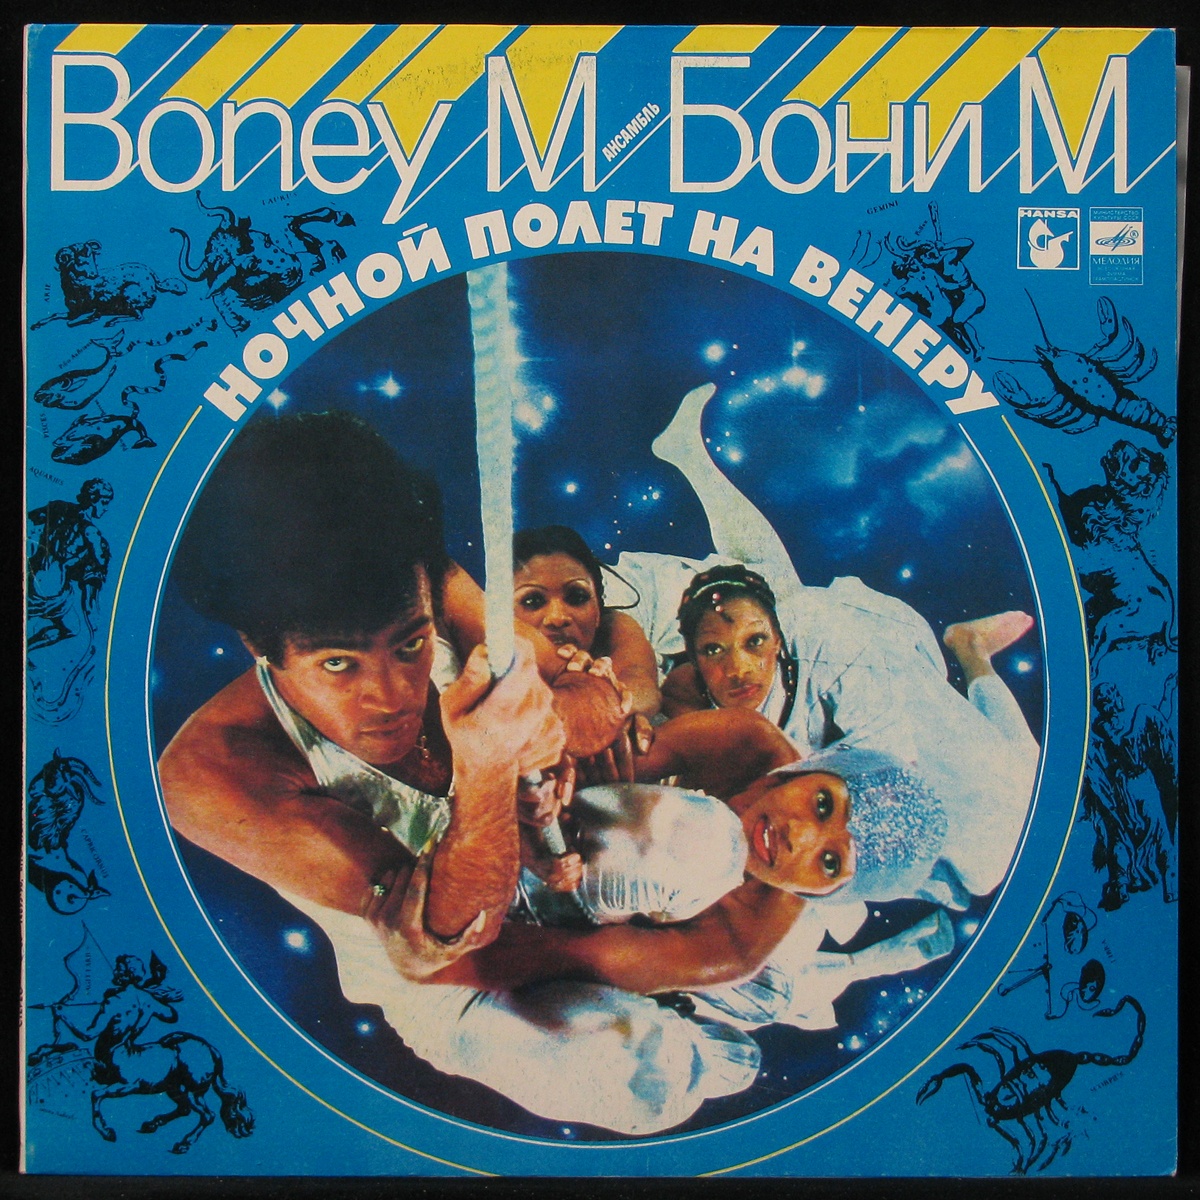 Boney m venus. Boney m Venus Nightflight LP. Boney m Nightflight to Venus 1978 пластинки. Boney m пластинка. Бони м. ночной полет на Венеру ("мелодия", с60-14895-96] 1980) обложка.